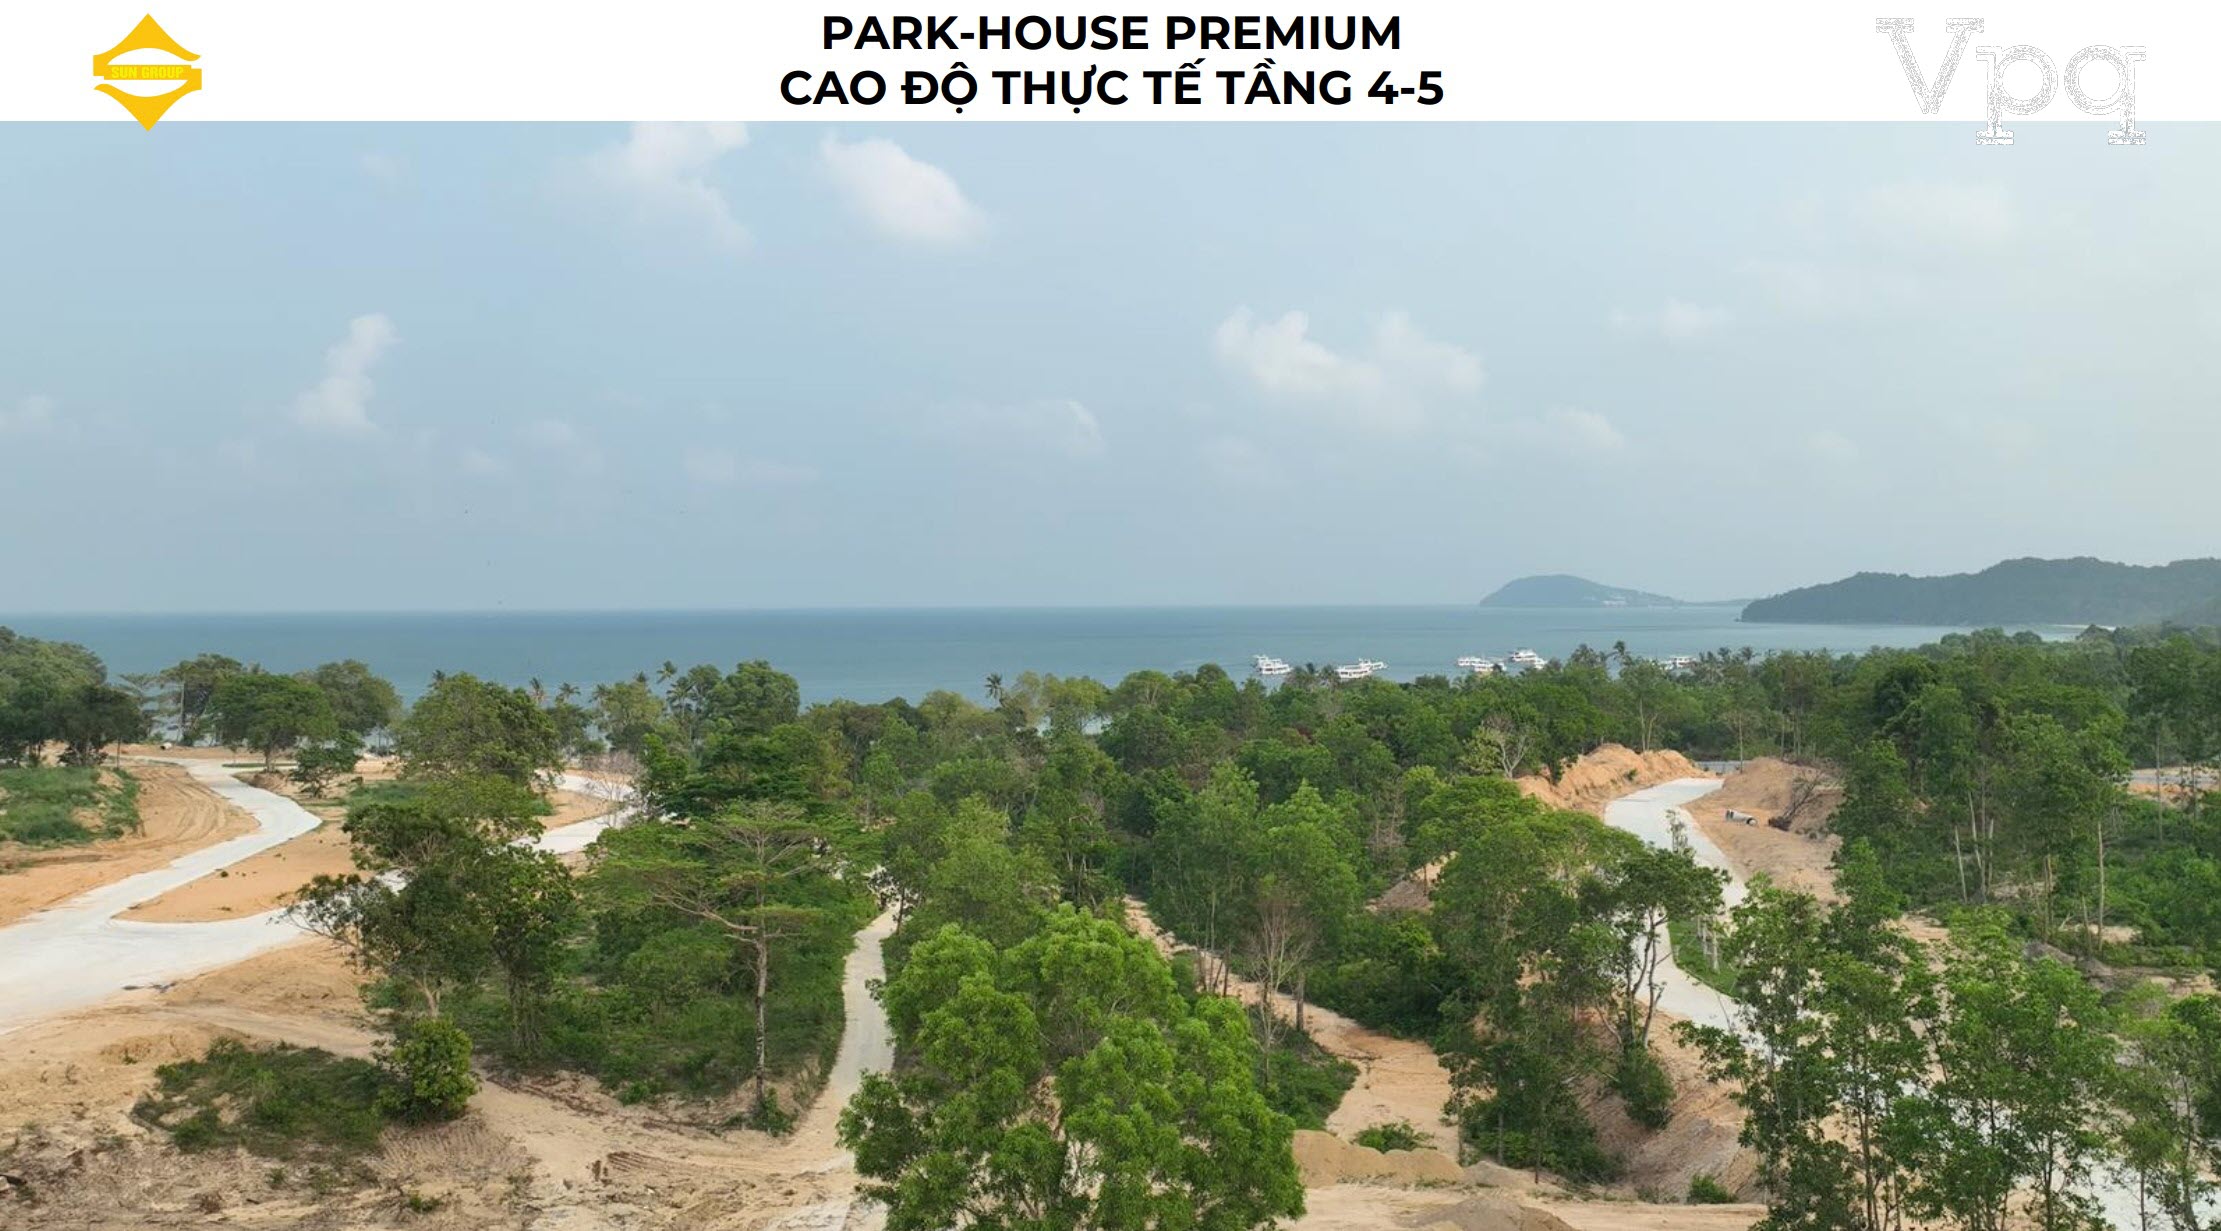 Park House Premium cao độ thực tế tầng 4,5